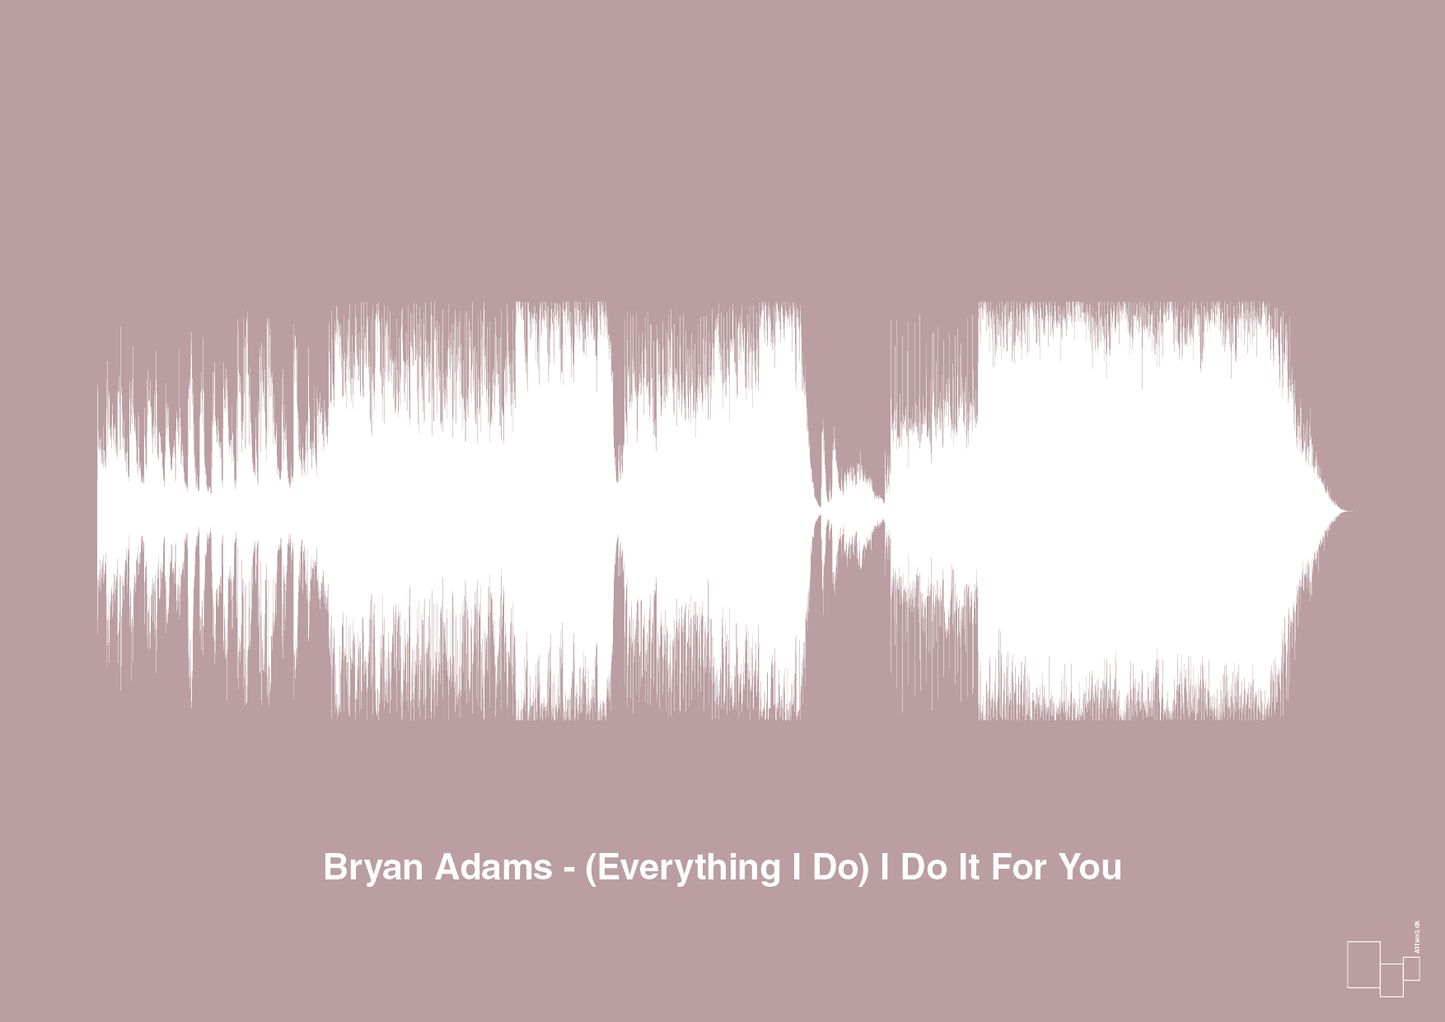 bryan adams - (everything i do) i do it for you - Plakat med Musik i Light Rose